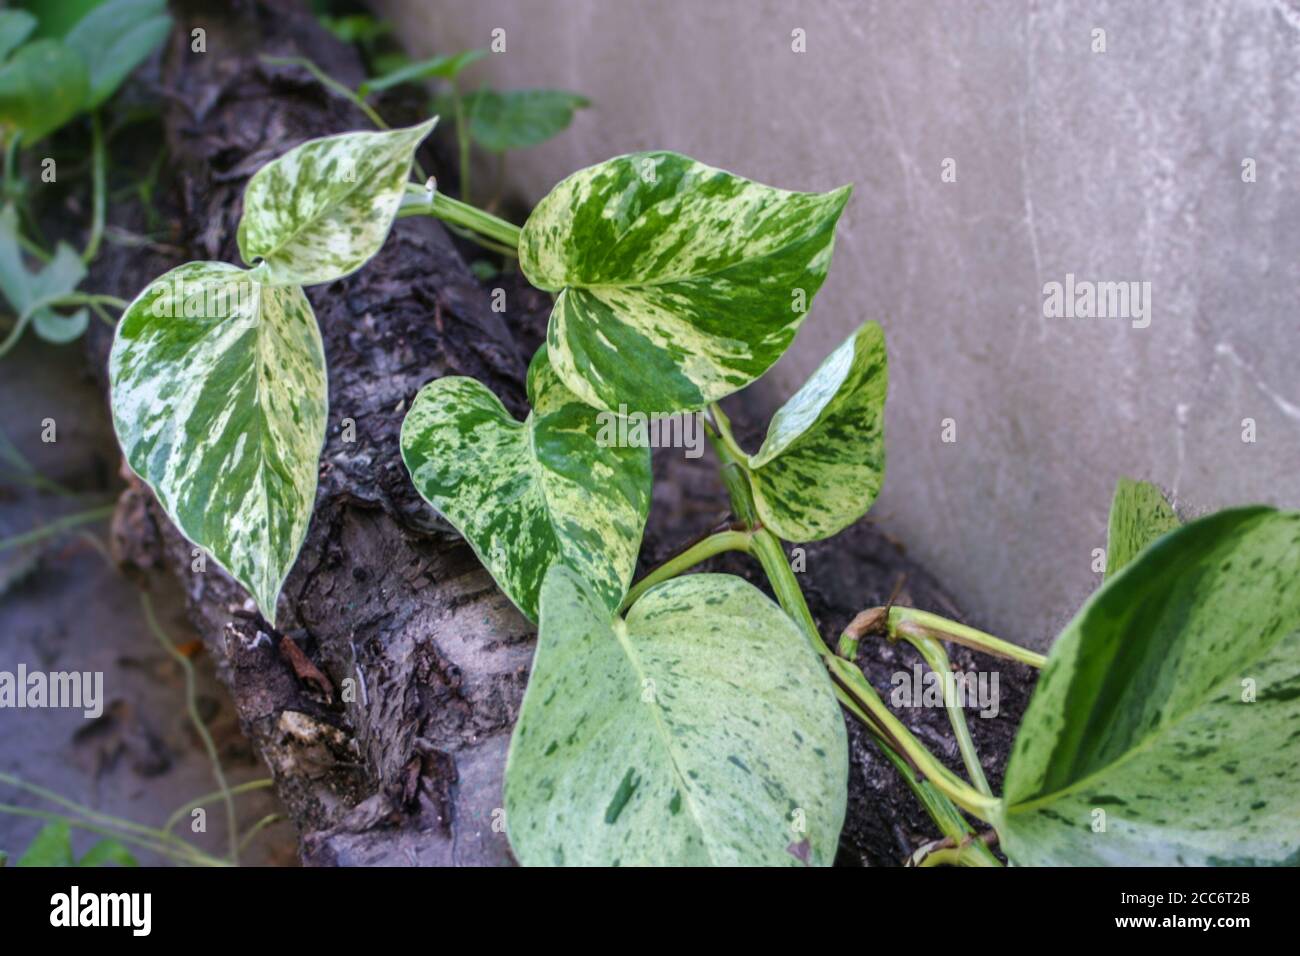 Scindapsus liana growing outdoors Stock Photo